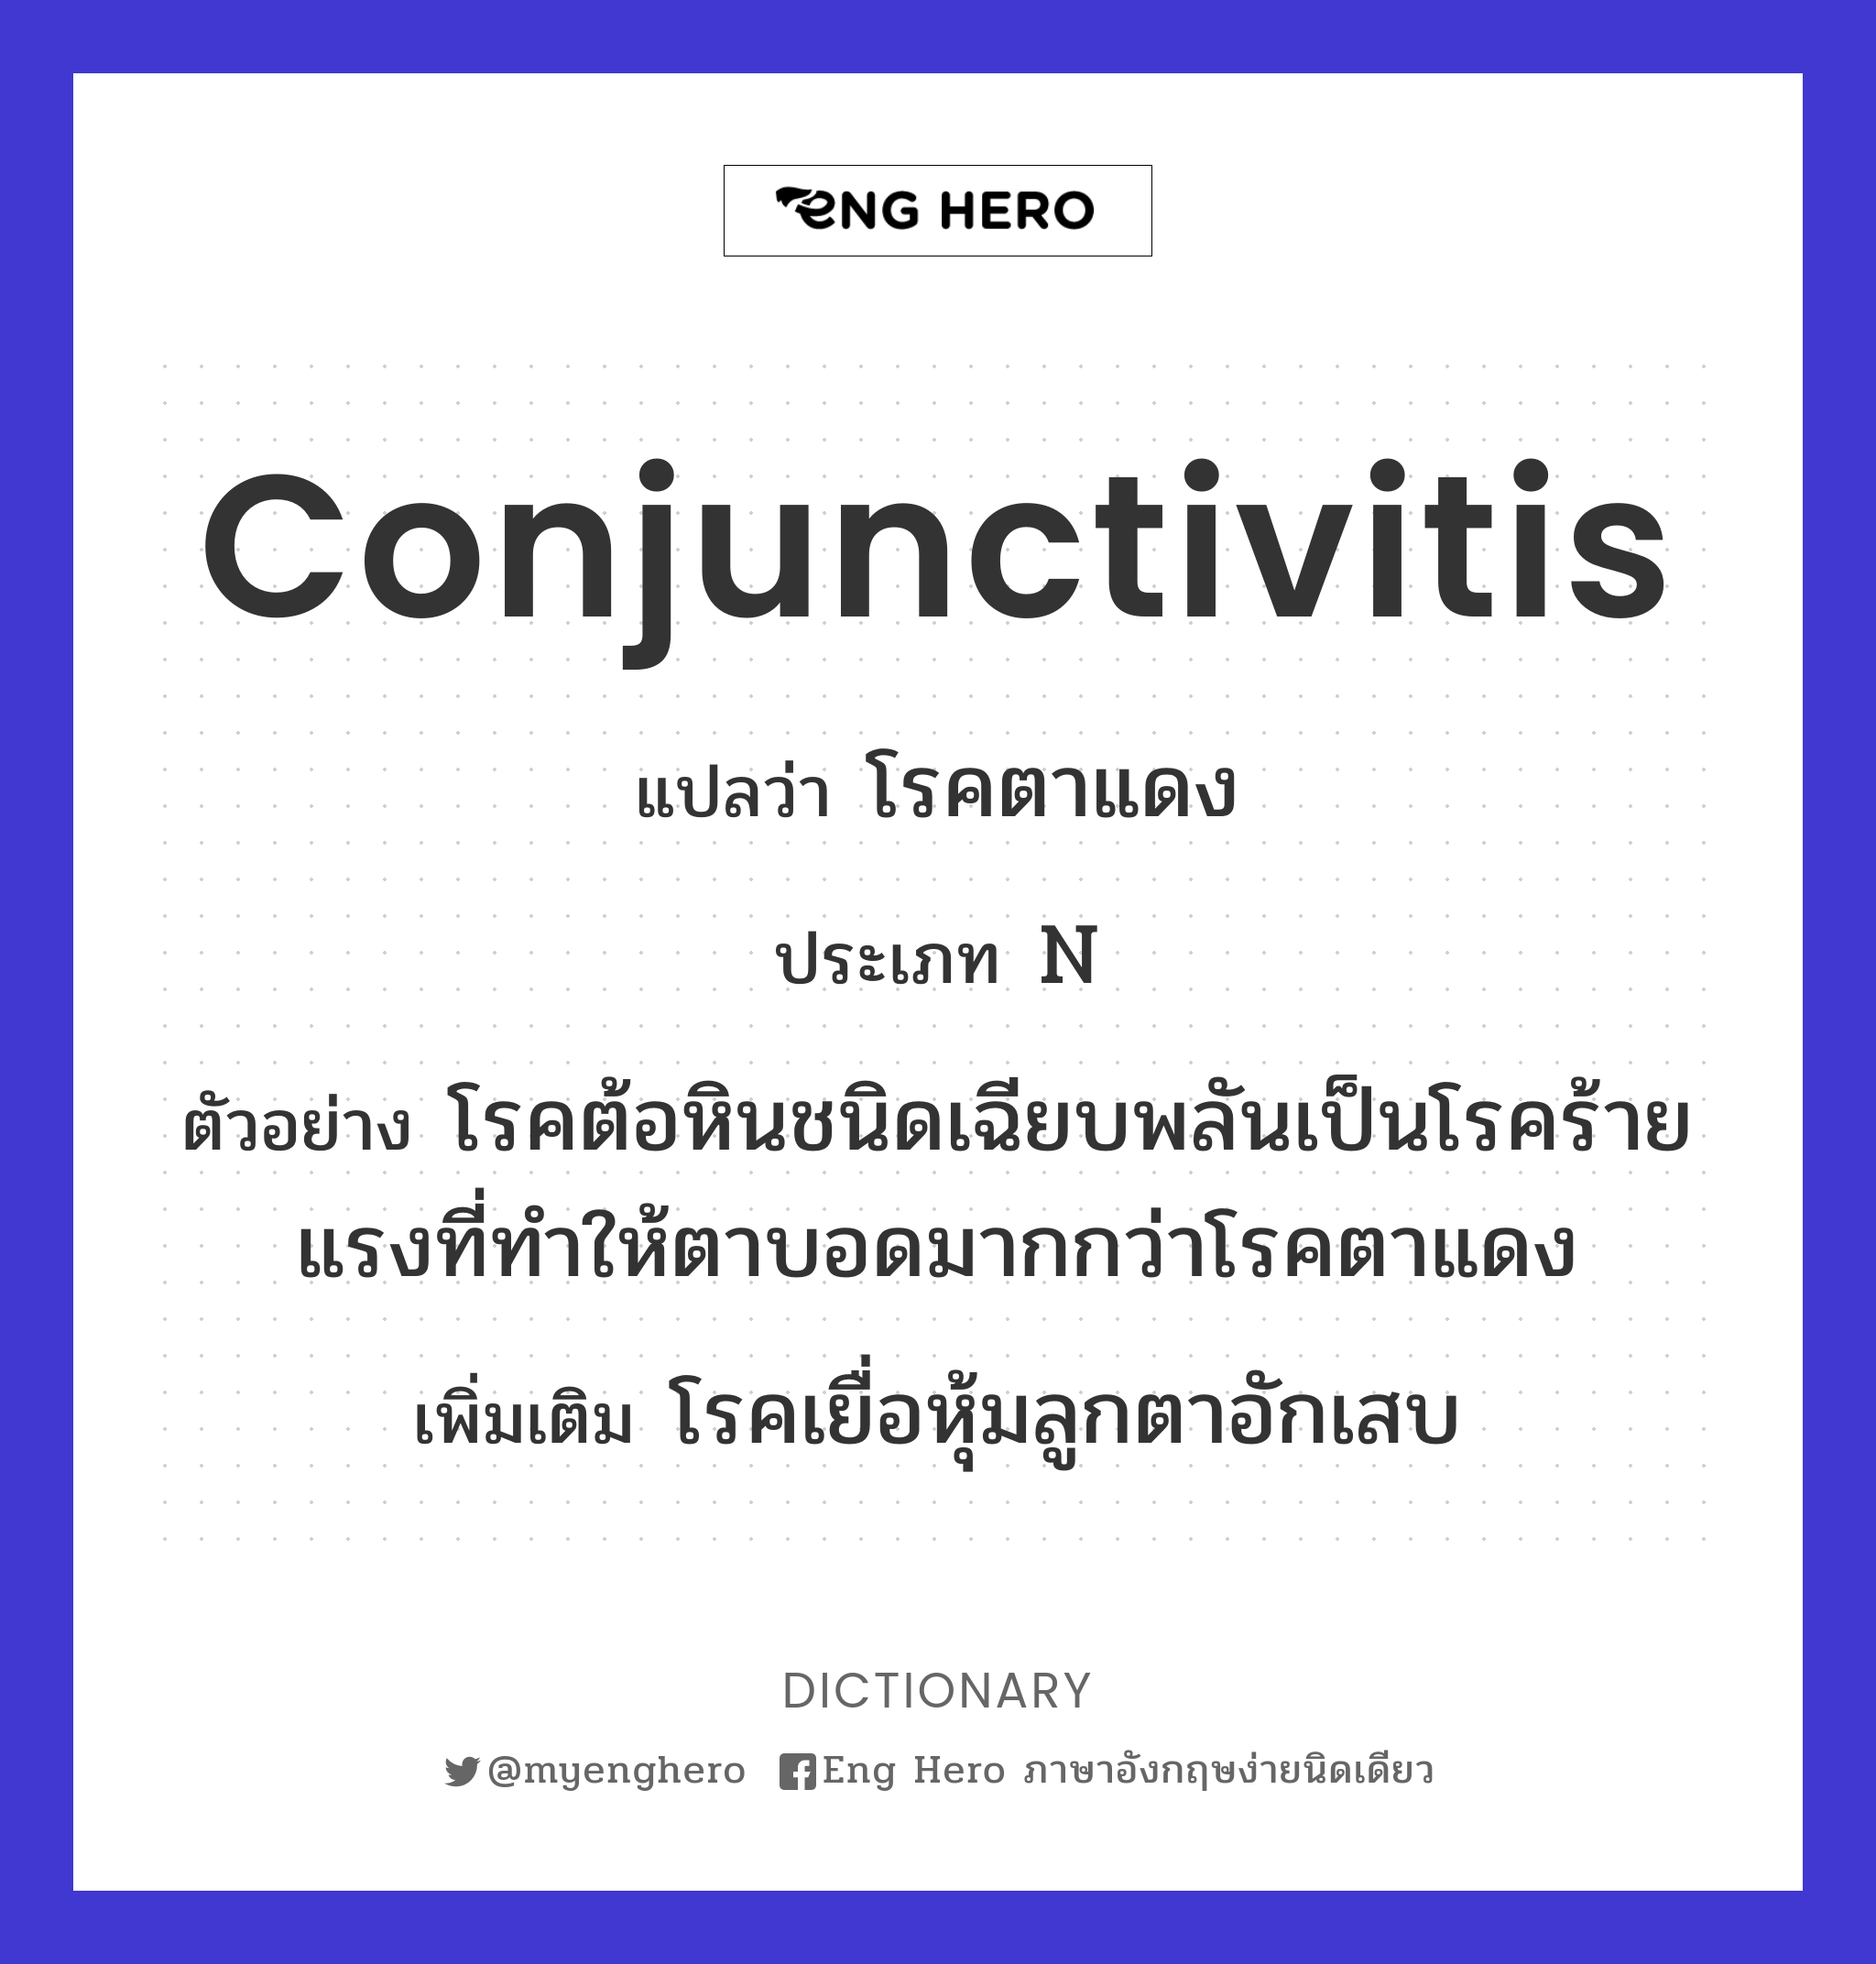 conjunctivitis